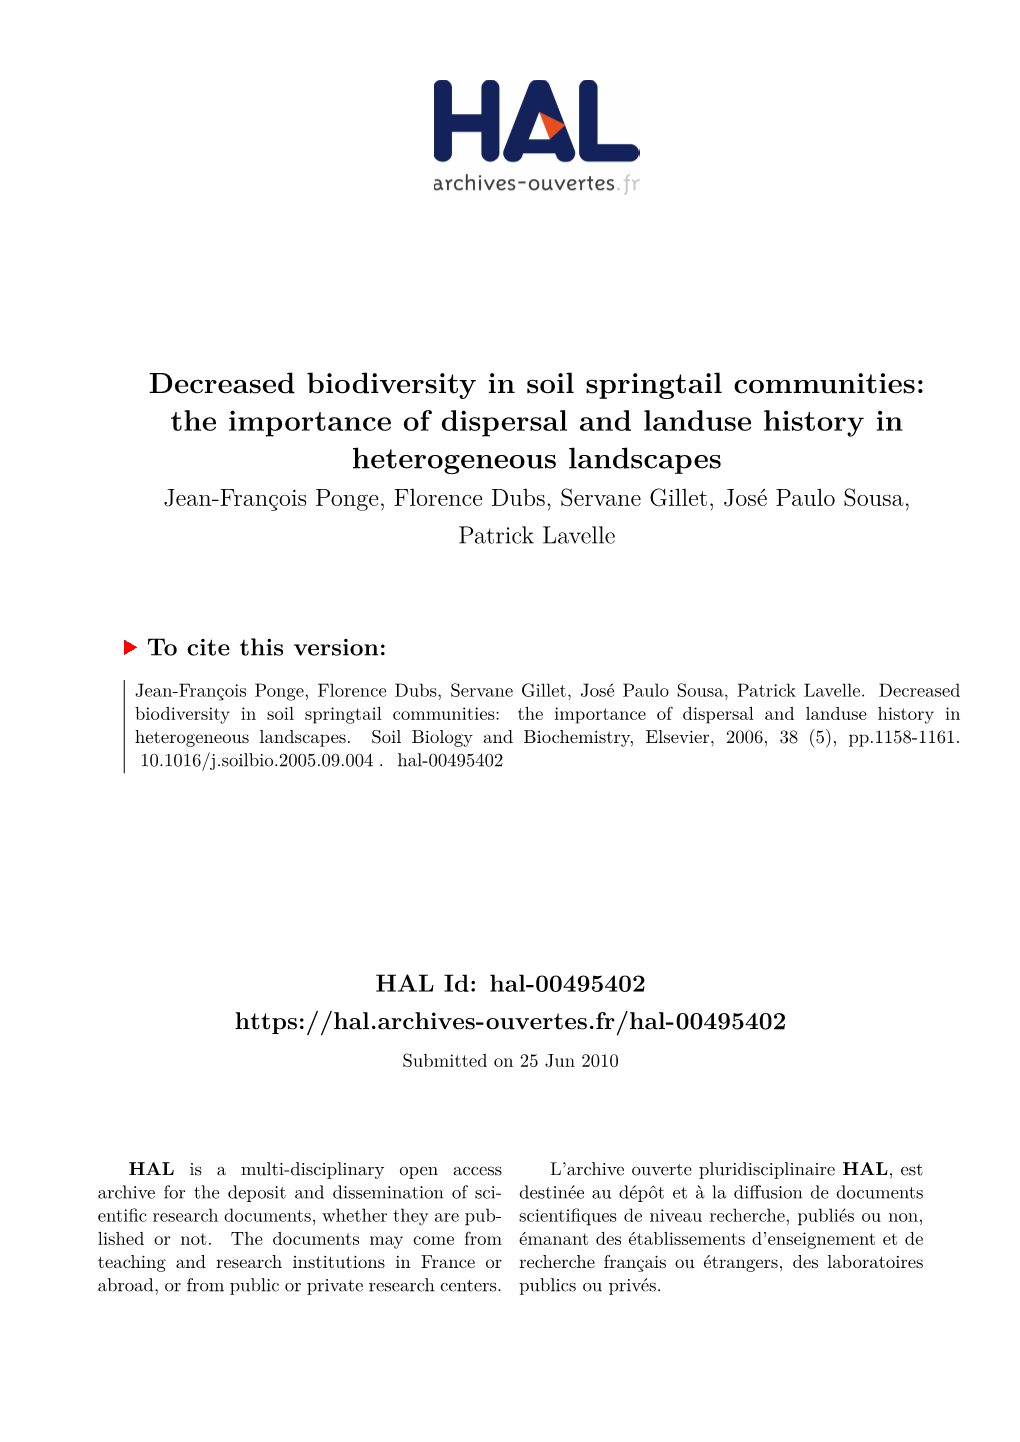 Decreased Biodiversity in Soil Springtail Communities: the Importance of Dispersal and Landuse History in Heterogeneous Landscap